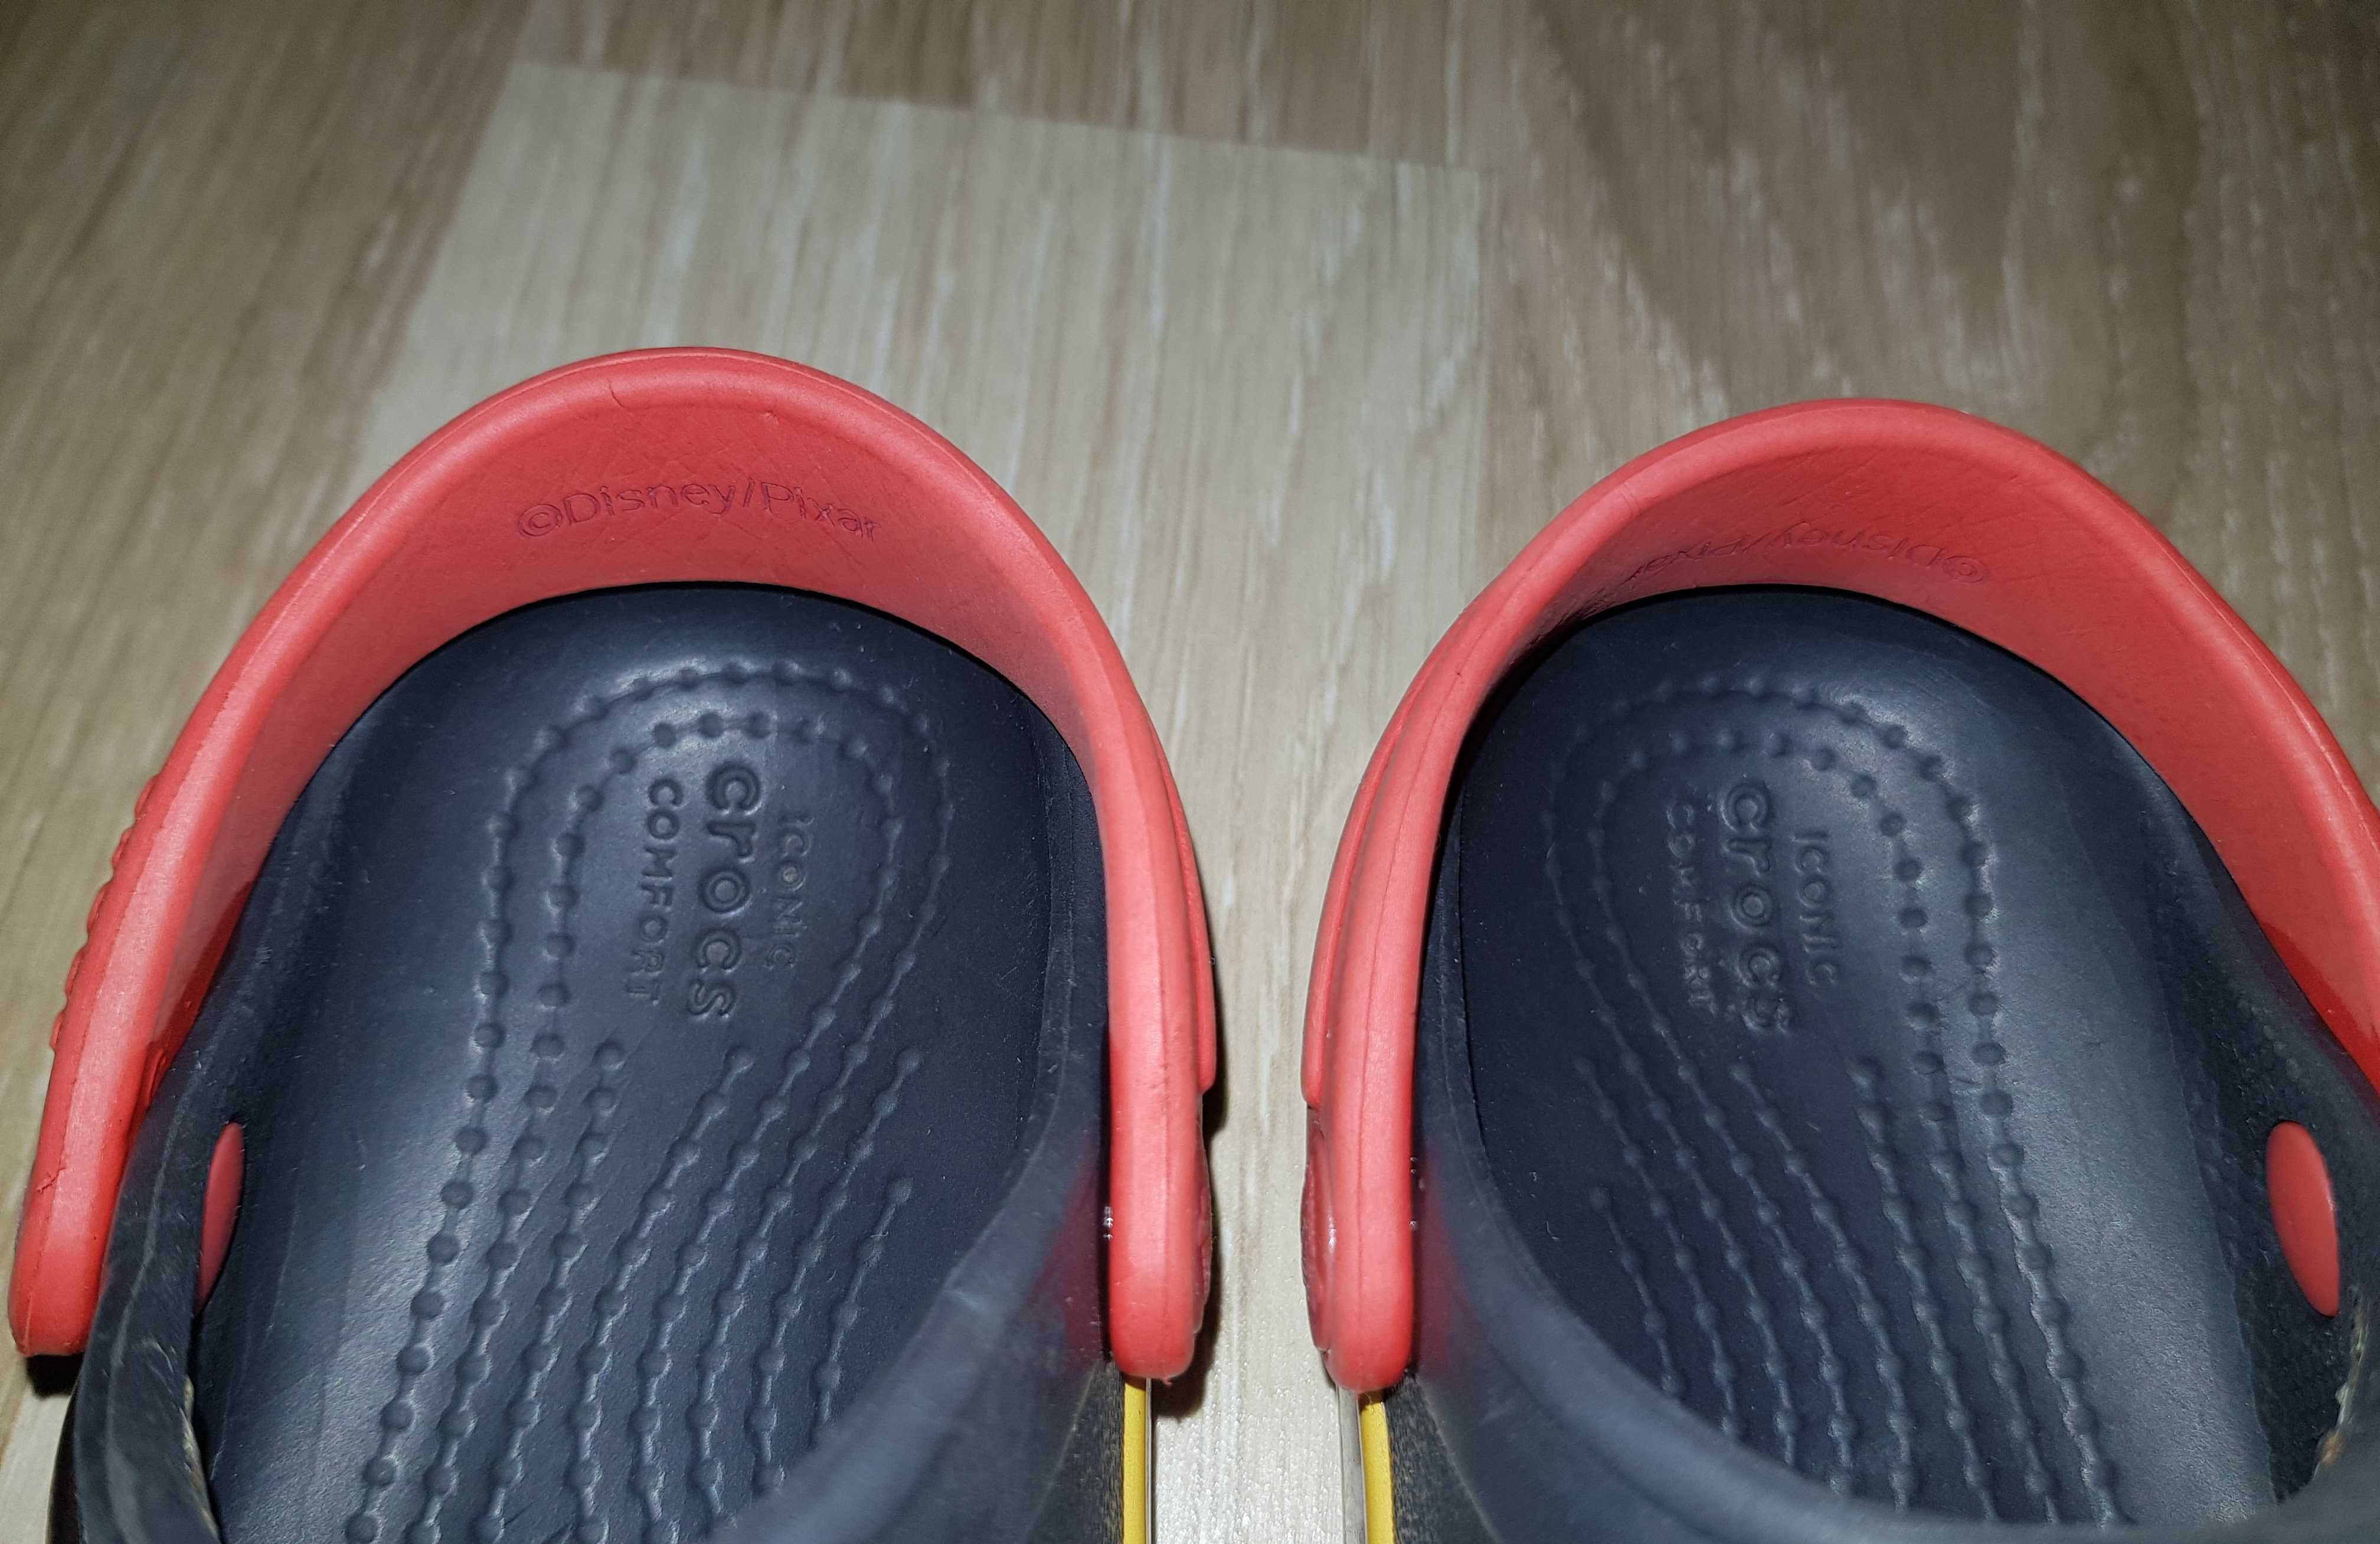 Adidasi Sandale Slapi Crocs Fulger McQueen mărimea 19/20 nike jordan